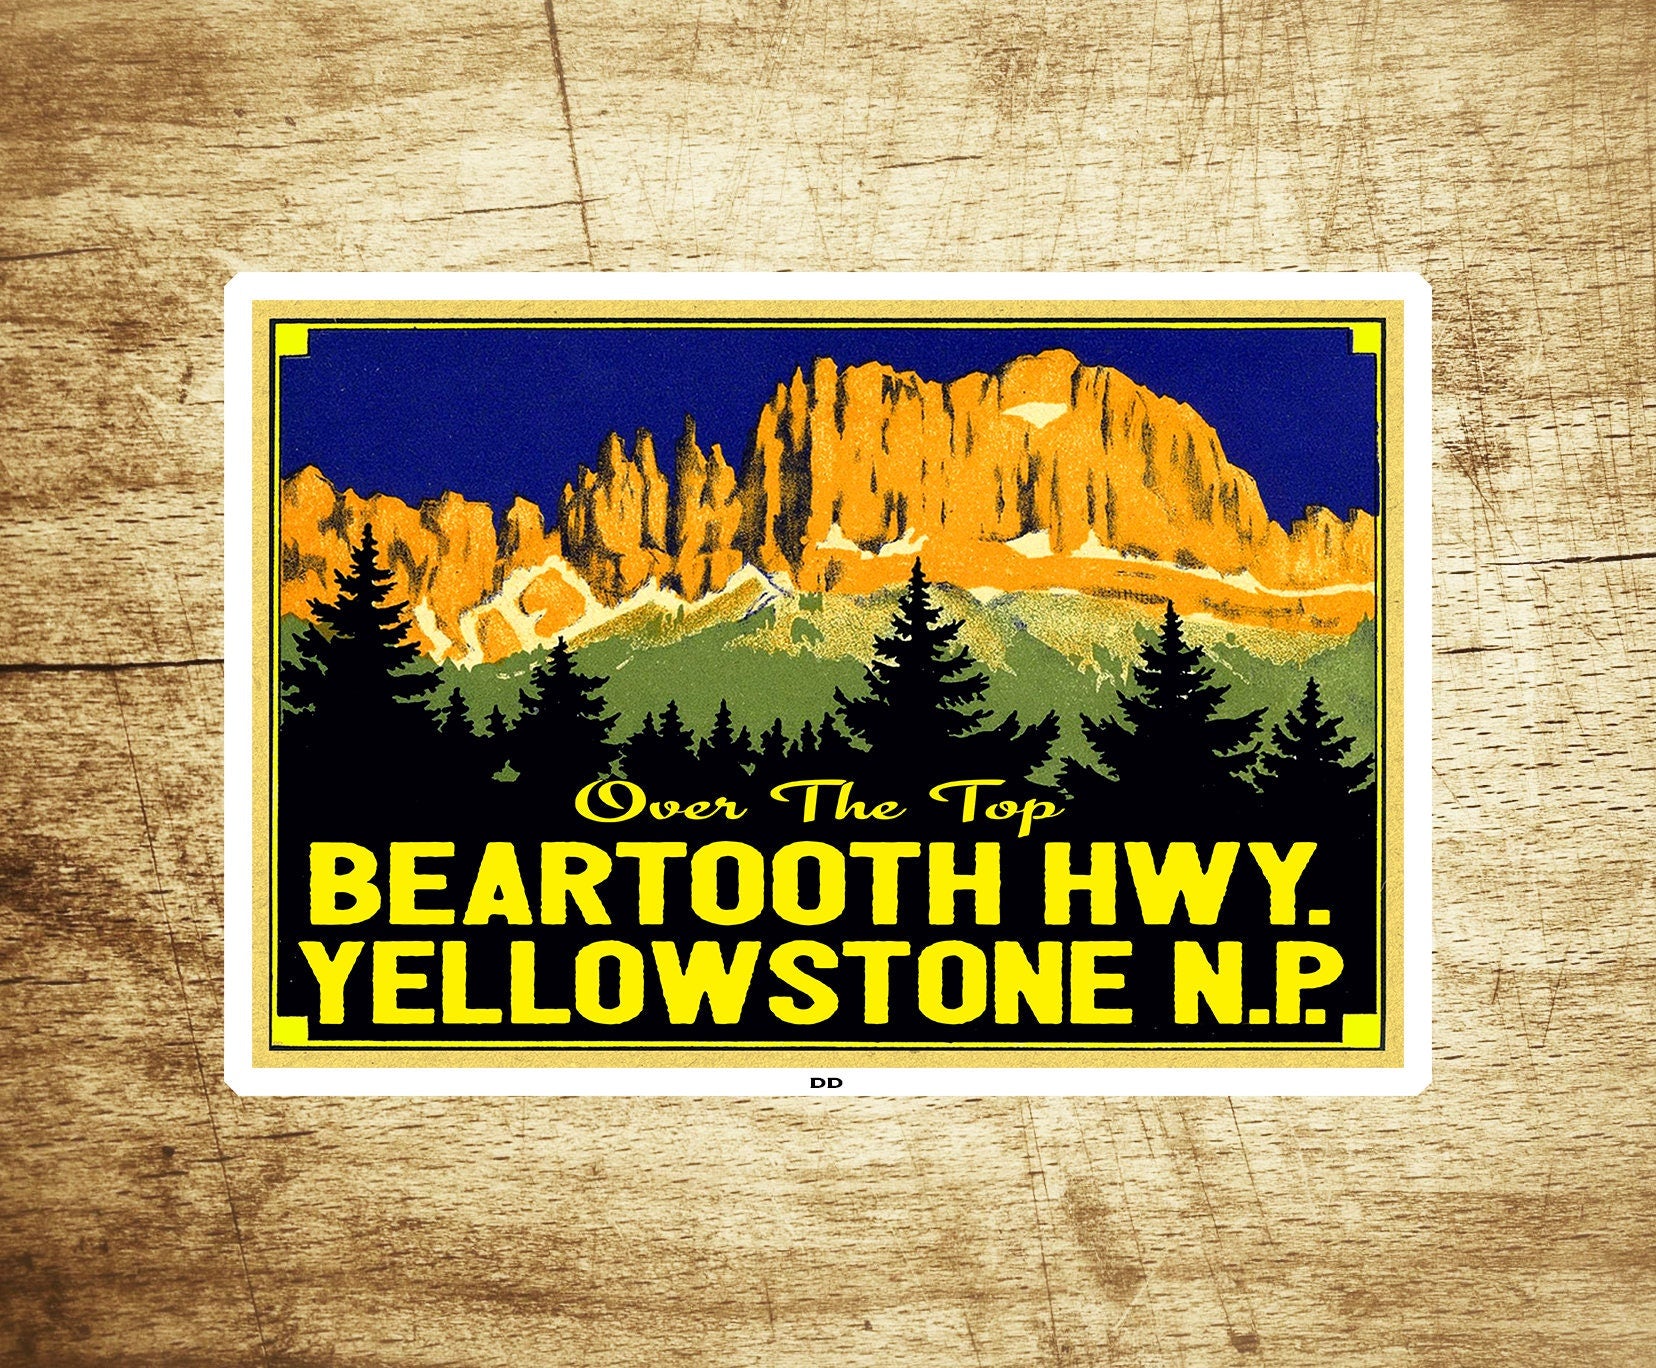 Yellowstone National Park Decal Sticker 3.75" x 2.55" Beartooth Highway